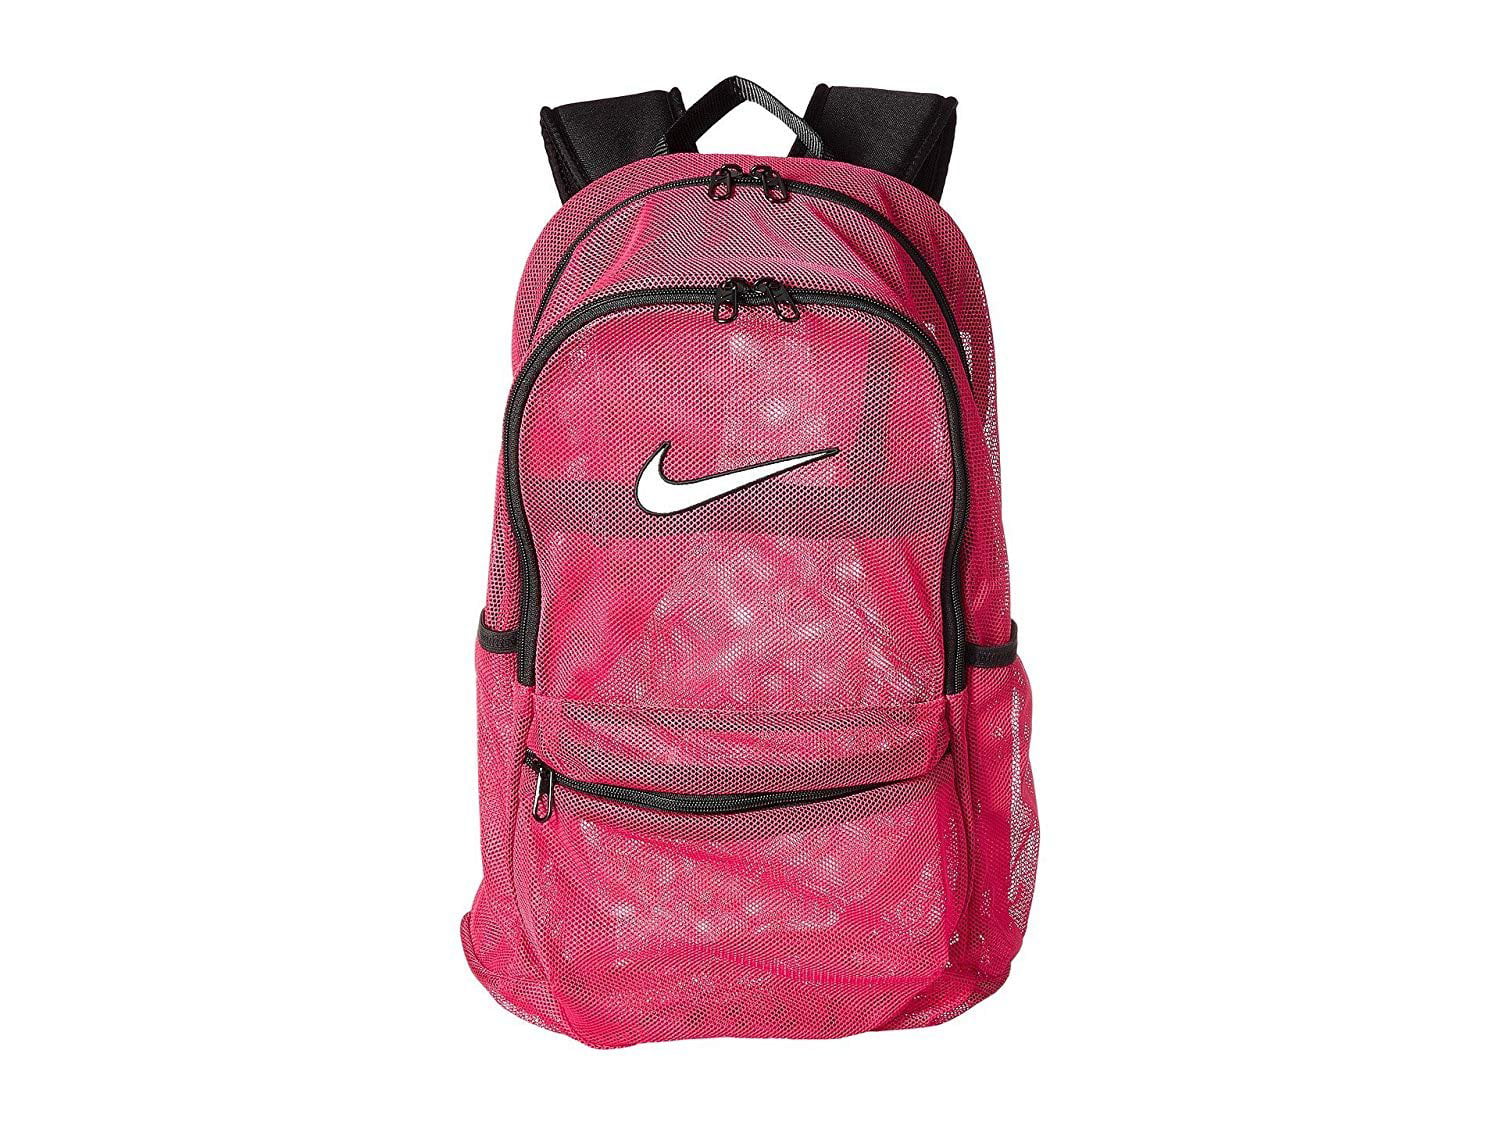 Nike Backpack Pink Bags for Men for sale | eBay